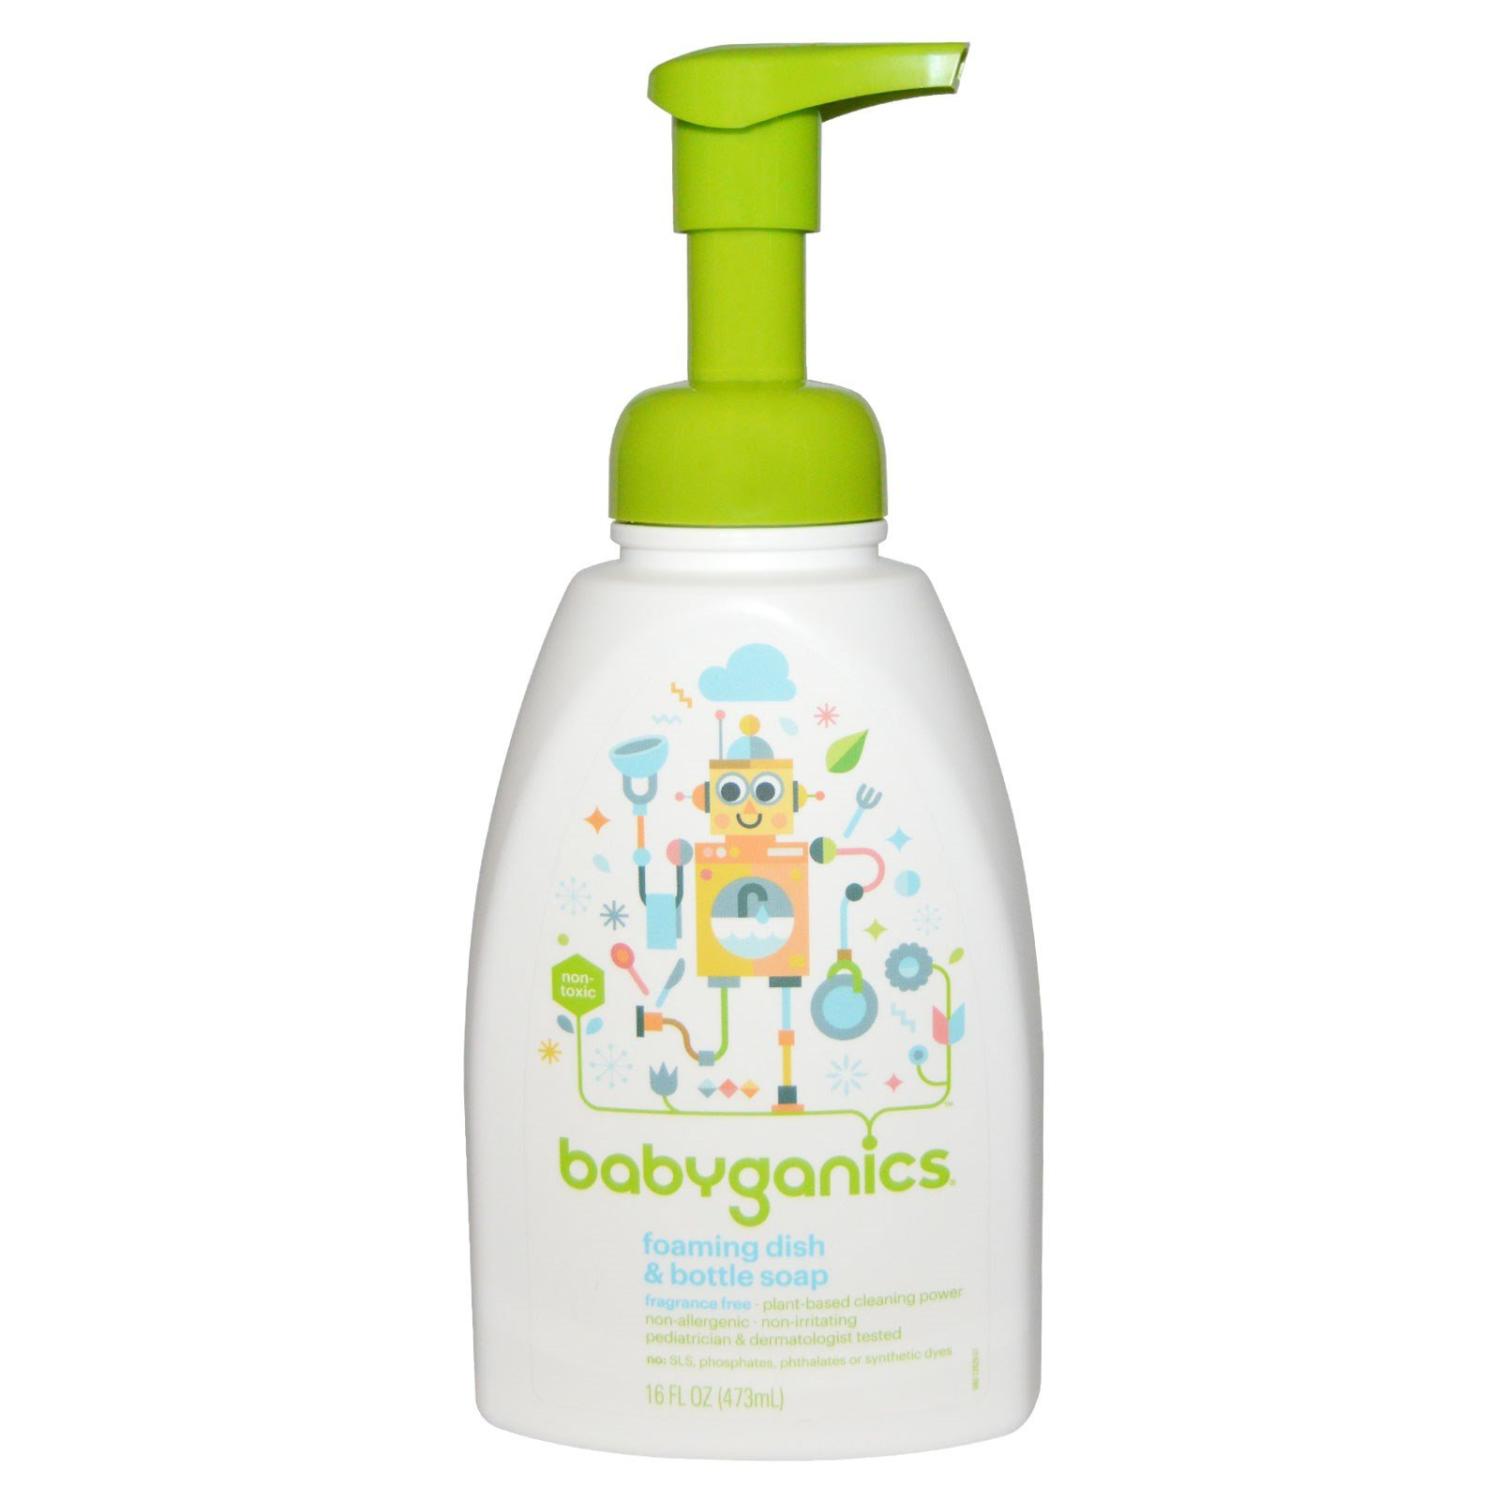 Foaming Baby Bottle & Dish Soap, Fragrance Free